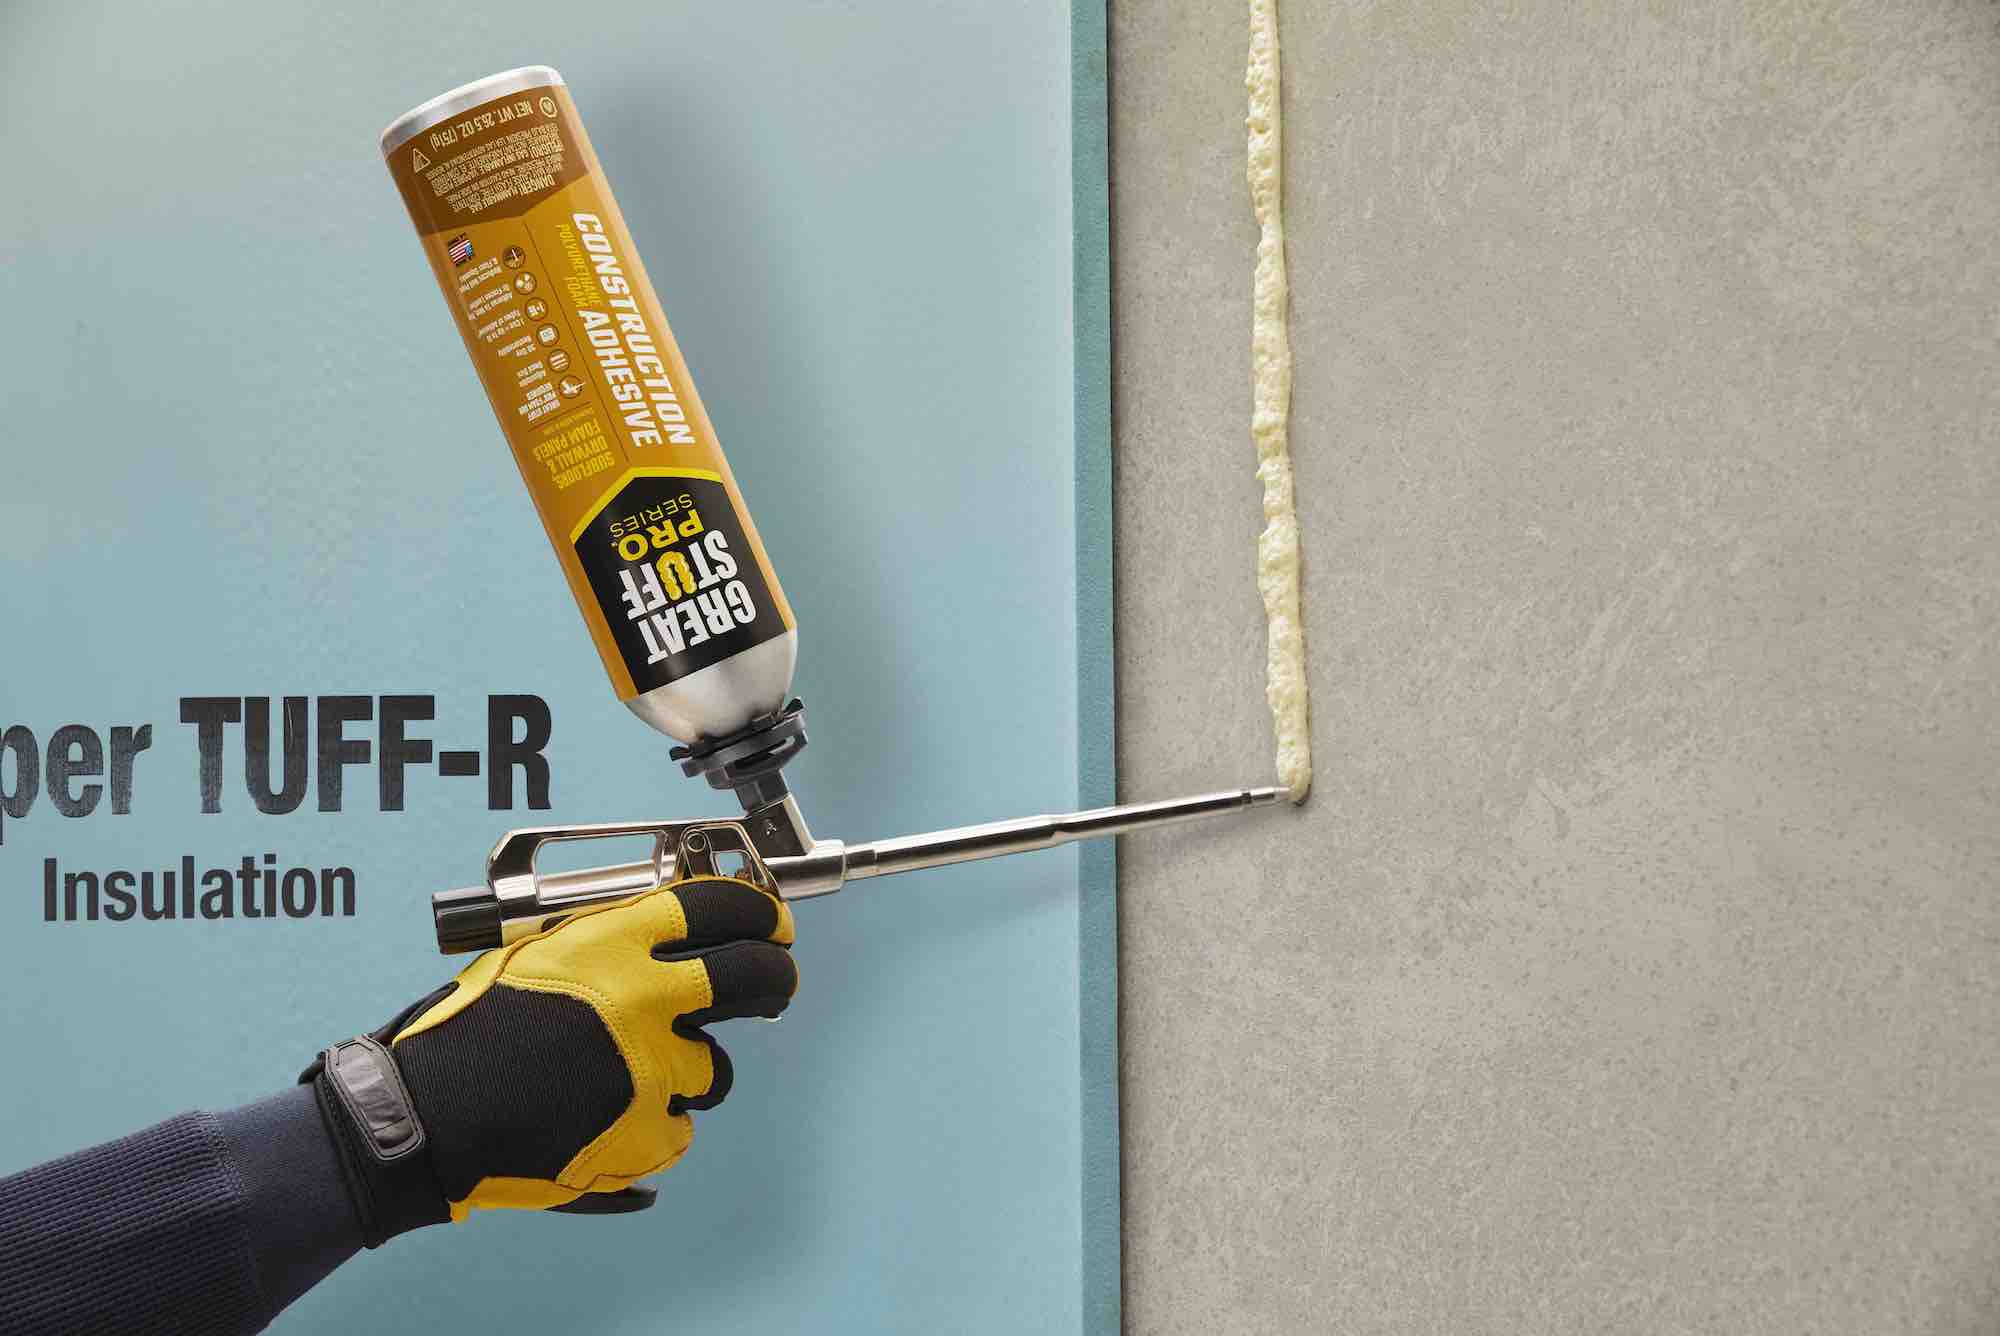 Great Stuff Construction Adhesive on Basement Wall - DuPont